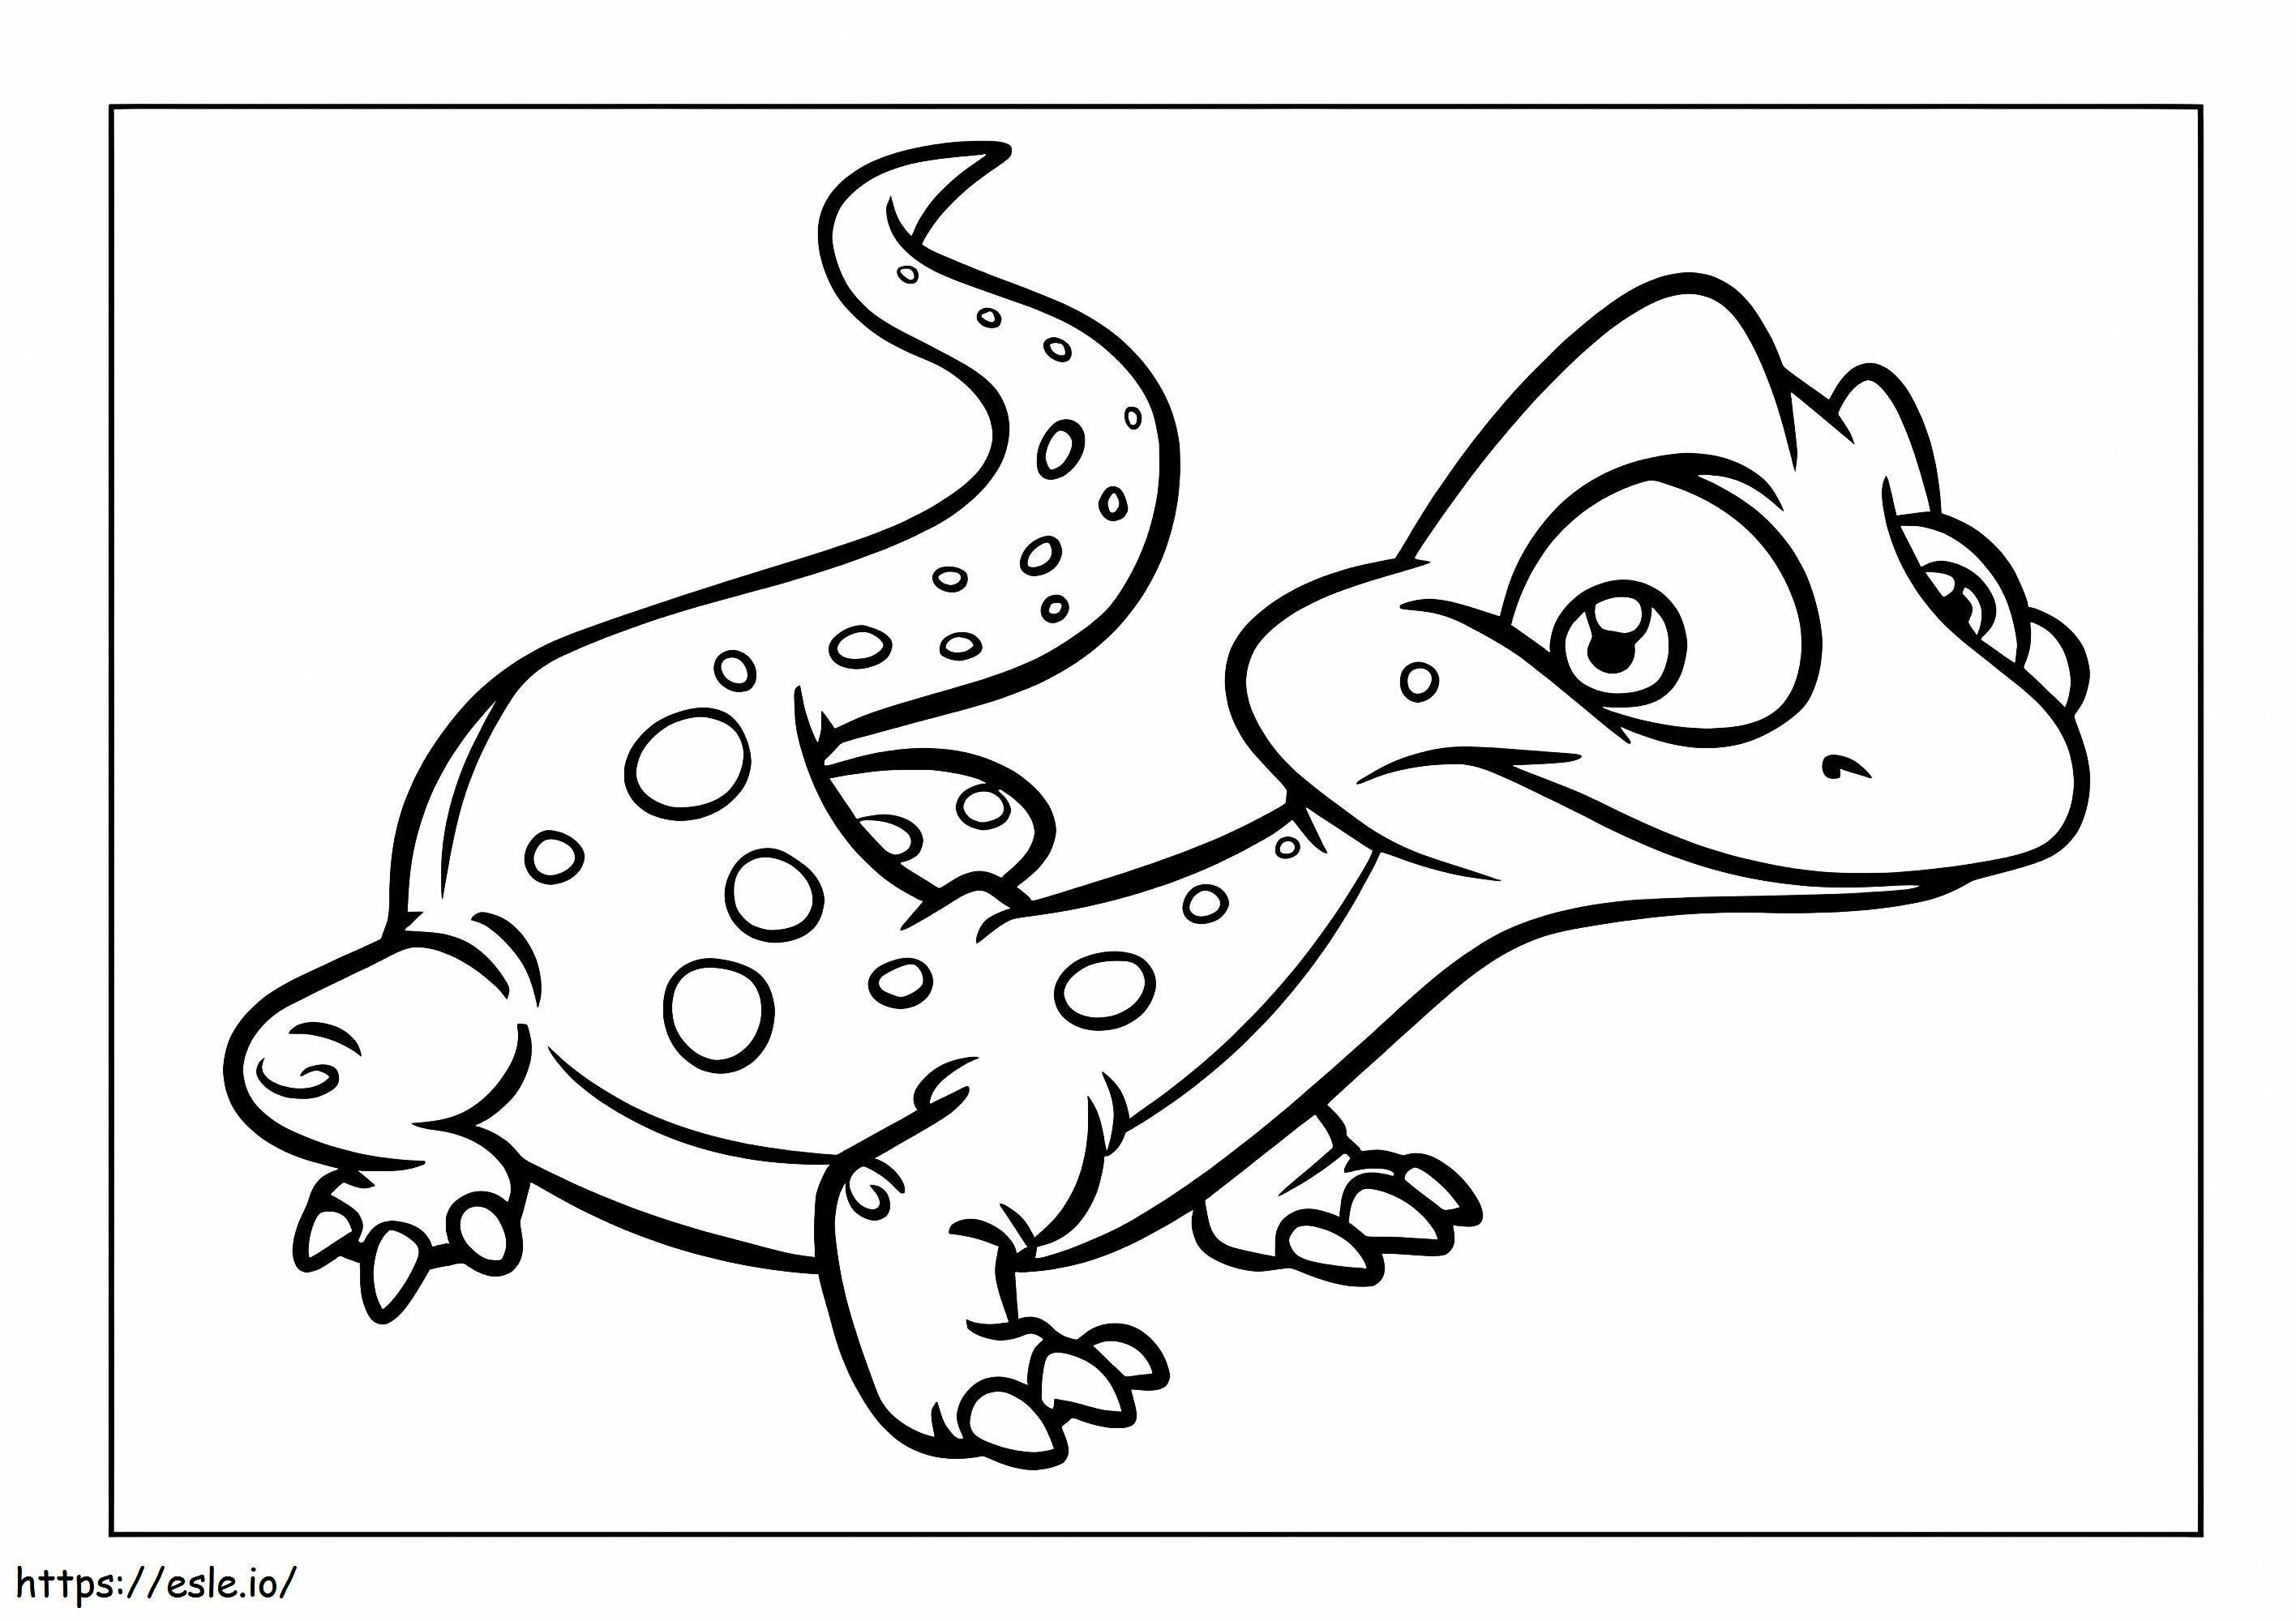 Beautiful Lizard coloring page